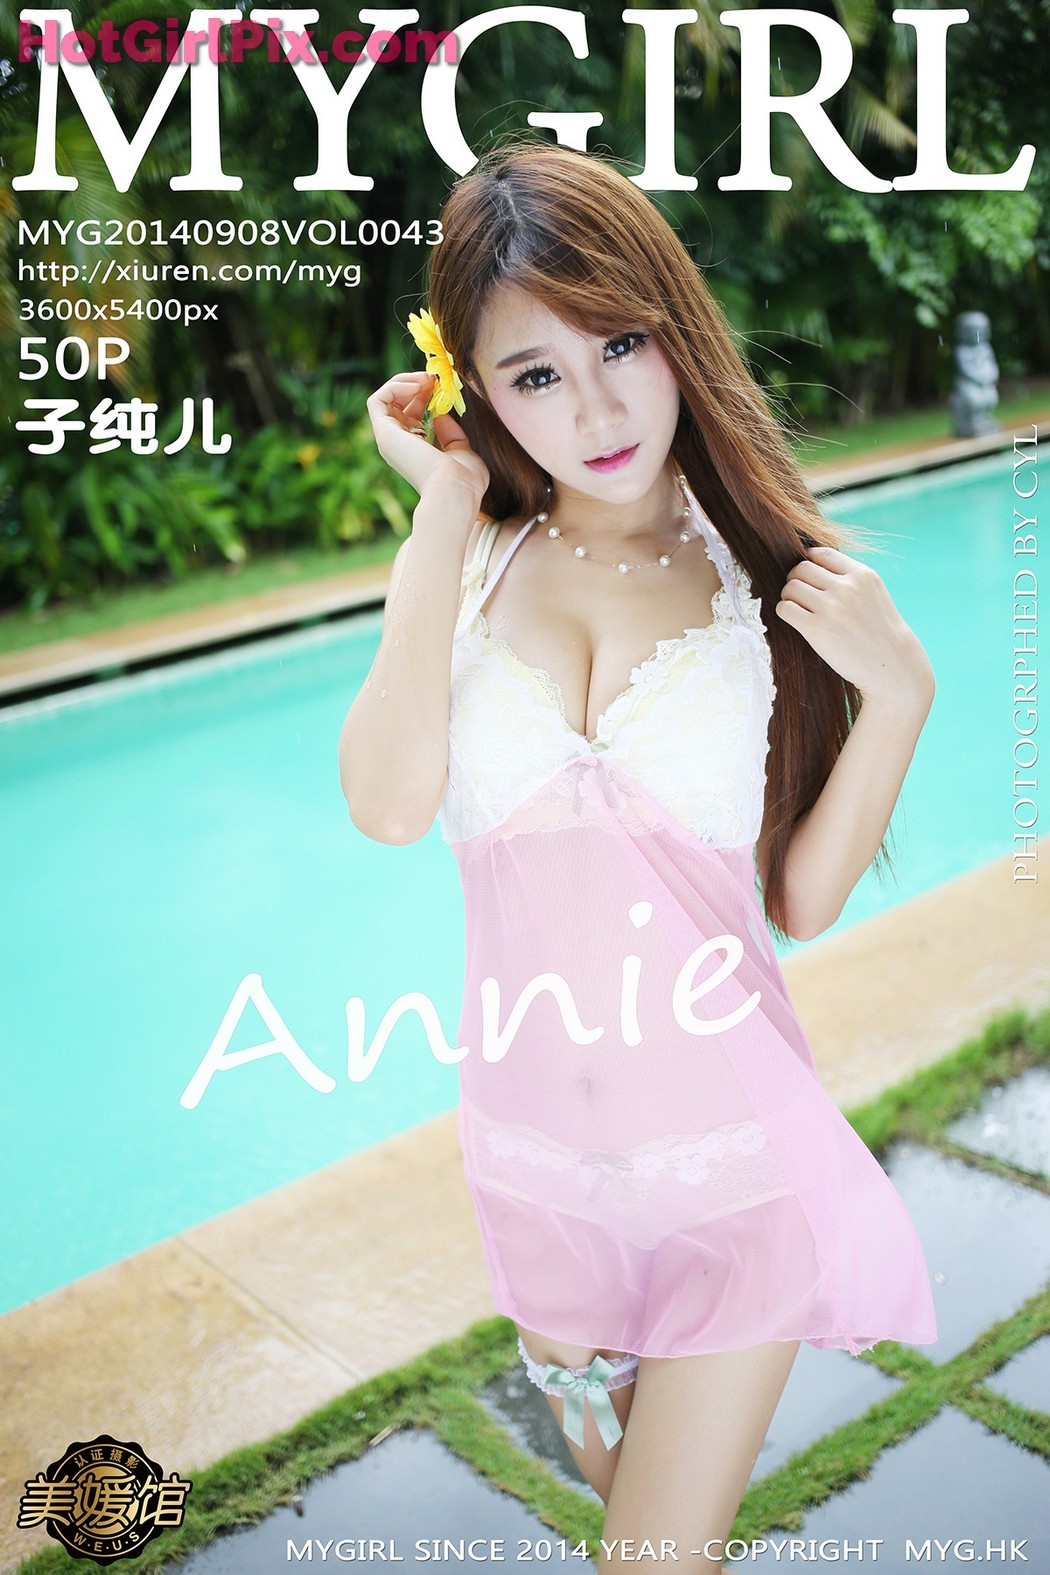 [MyGirl] Vol.043 Zi Chun Er 子纯儿Annie Cover Photo